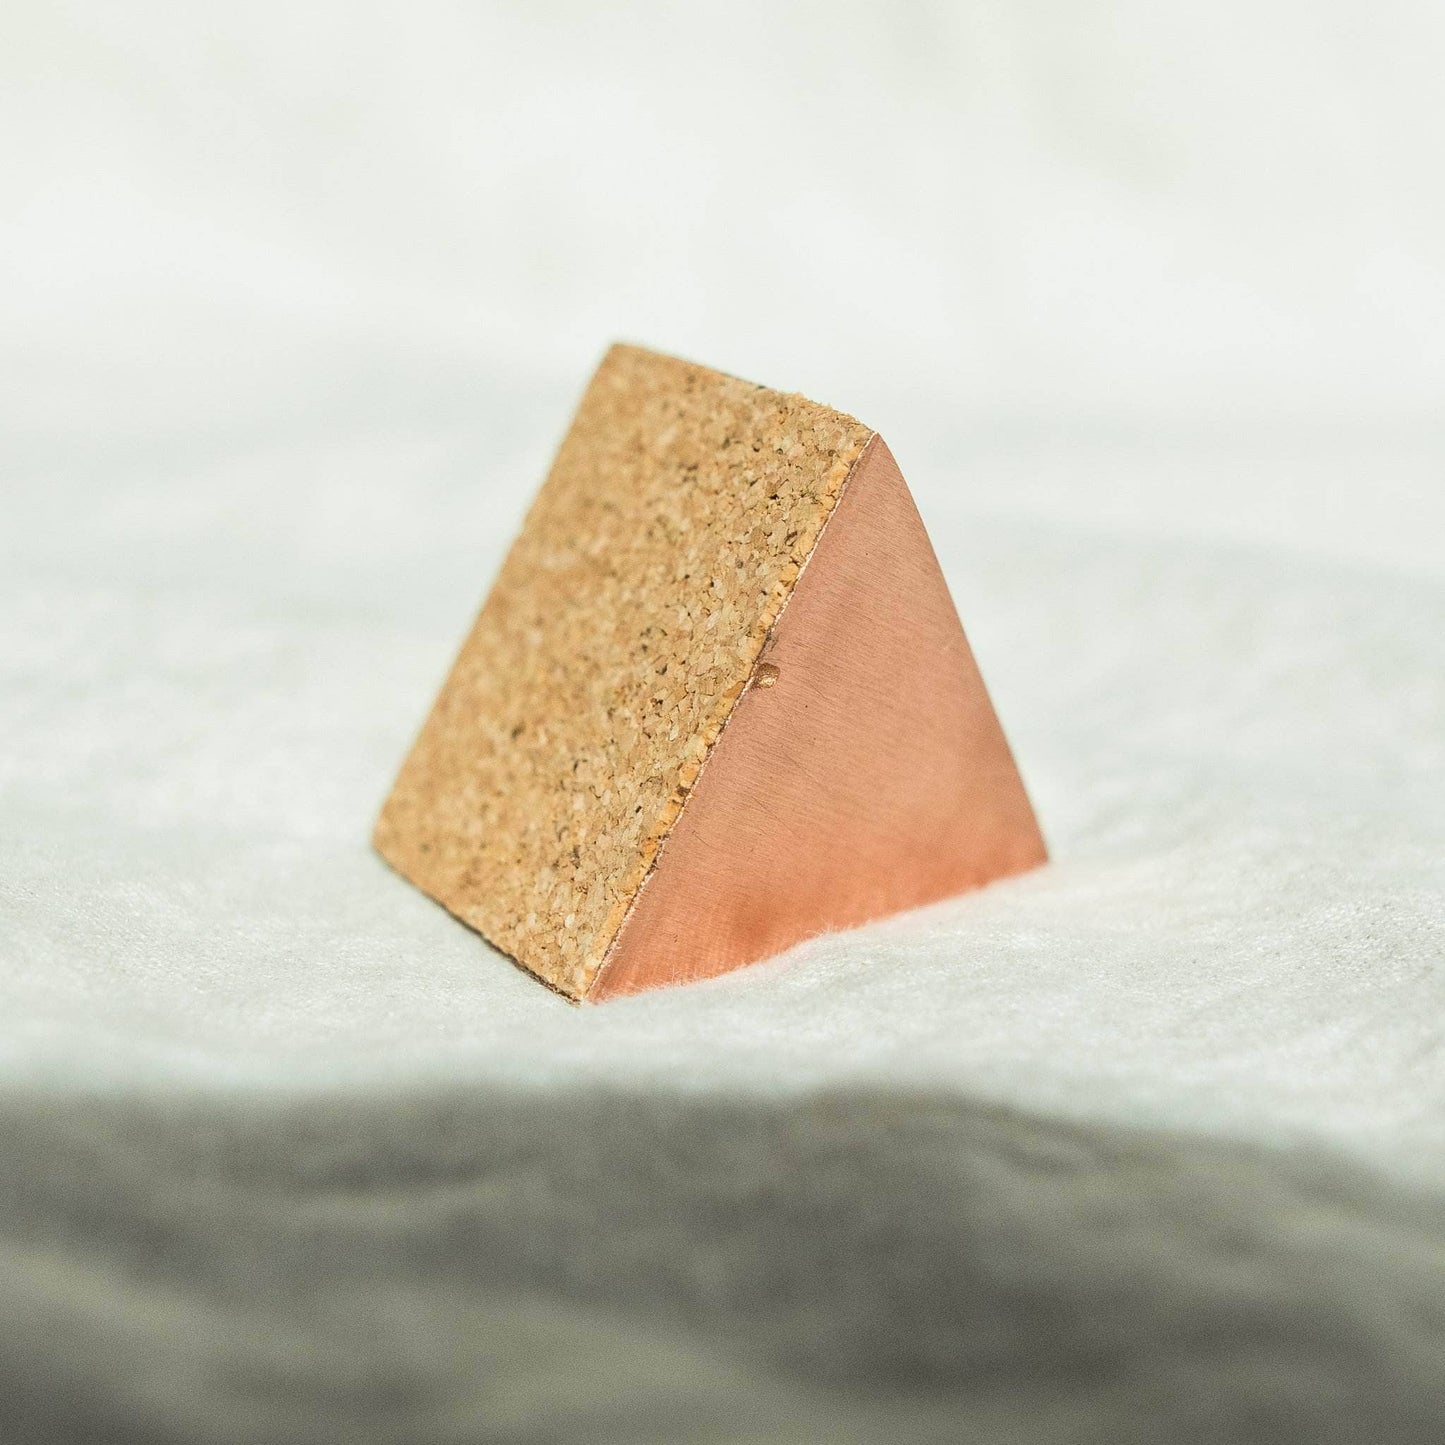 Copper Healing Pyramid